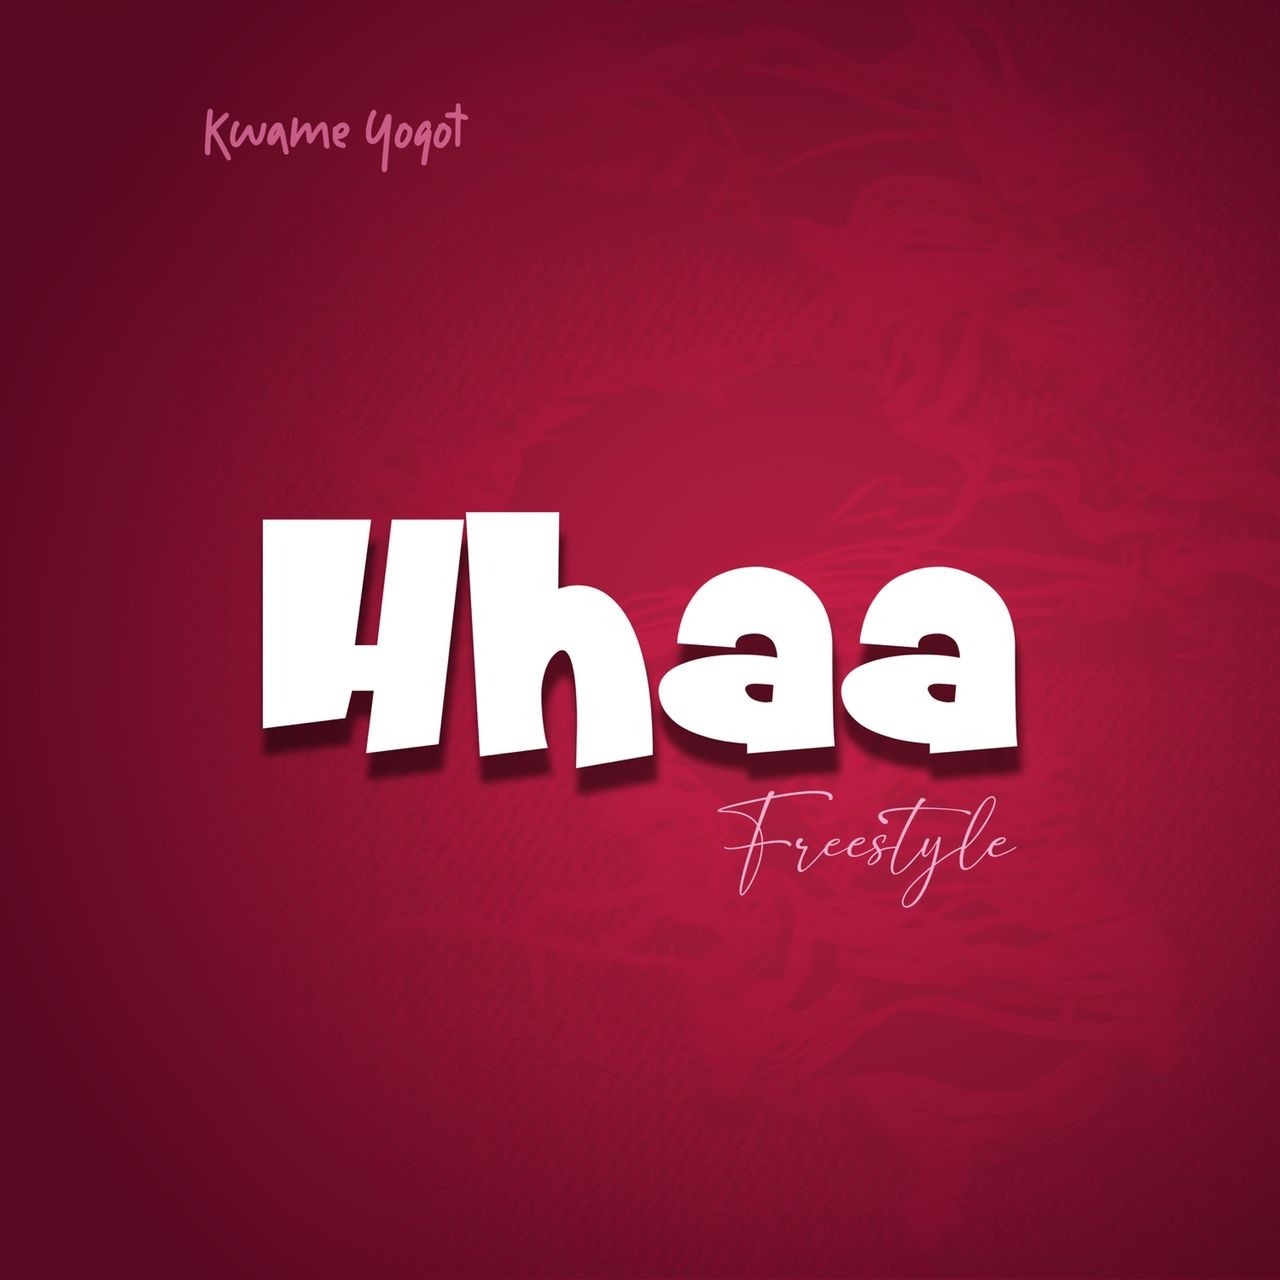 Kwame Yogot – Hhaa (Freestyle)